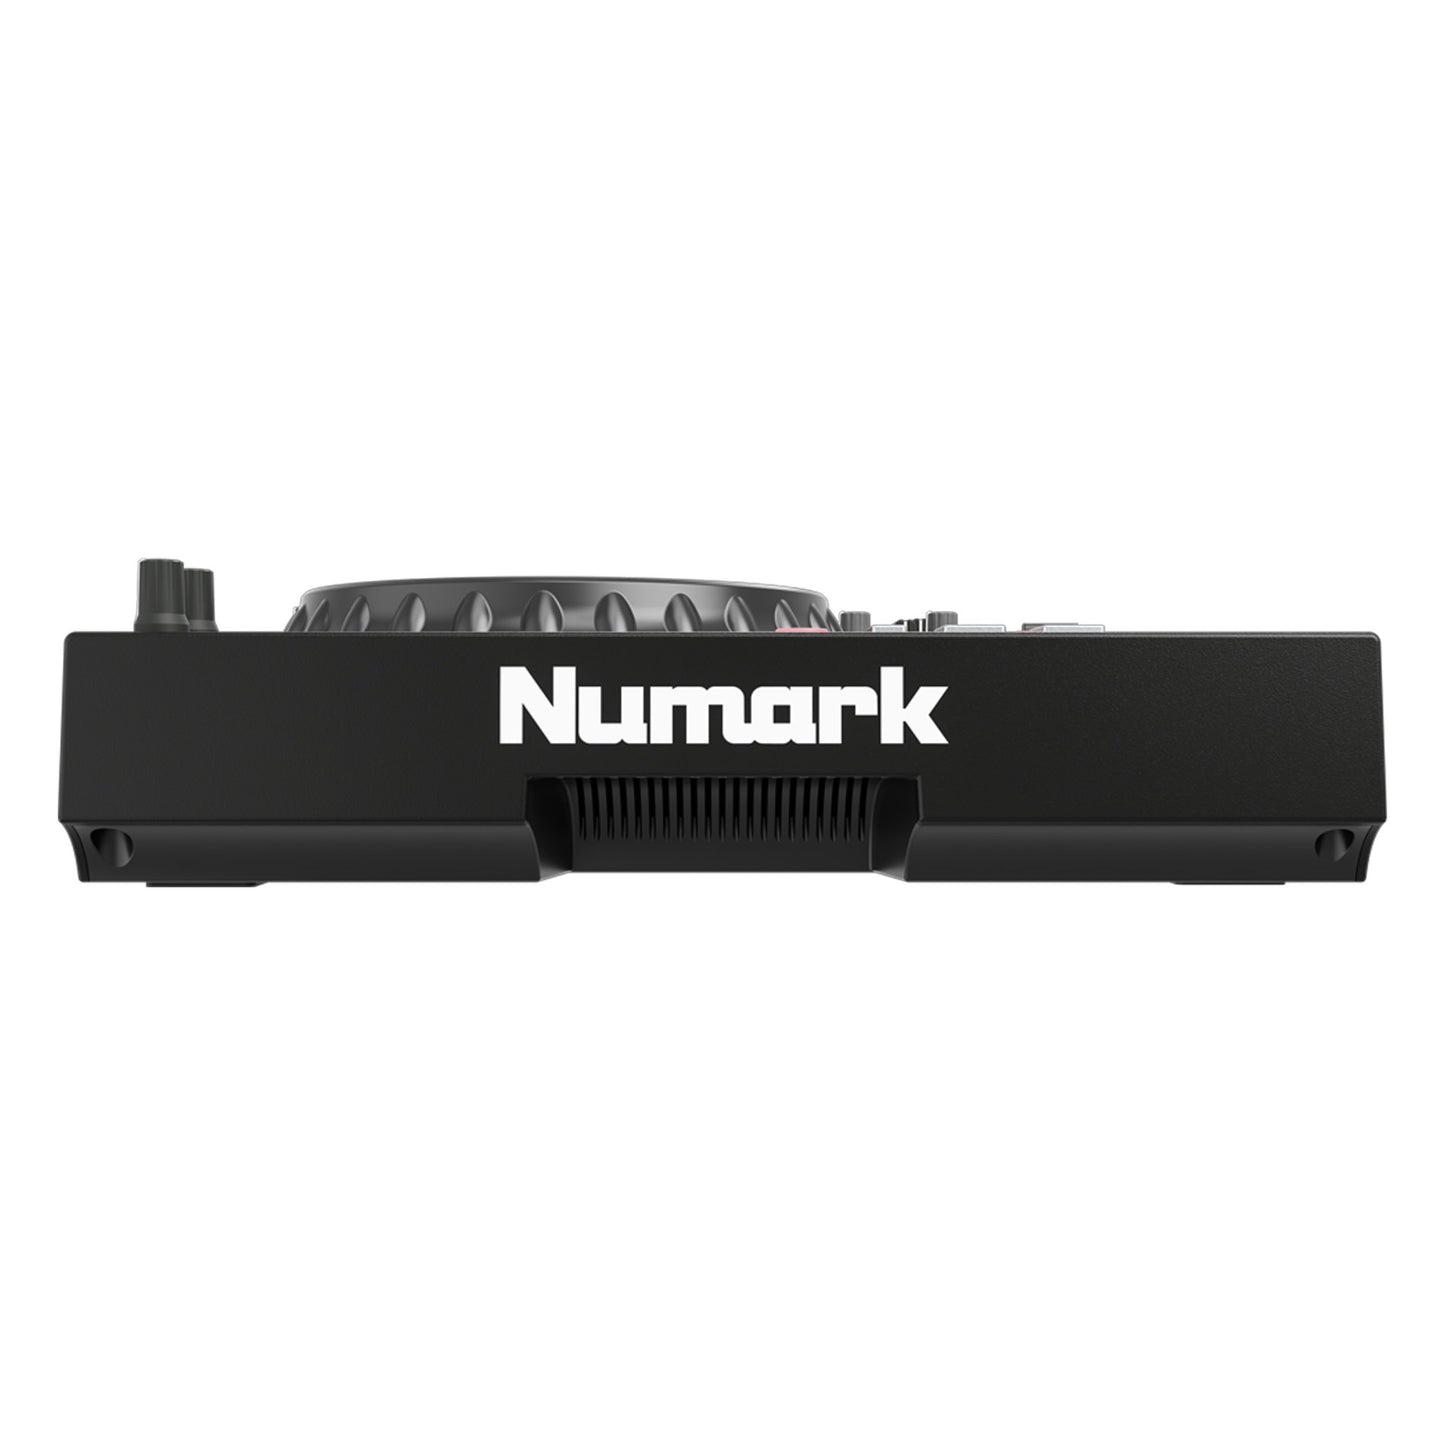 Numark Mixstream Pro Stand Alone DJ Controller